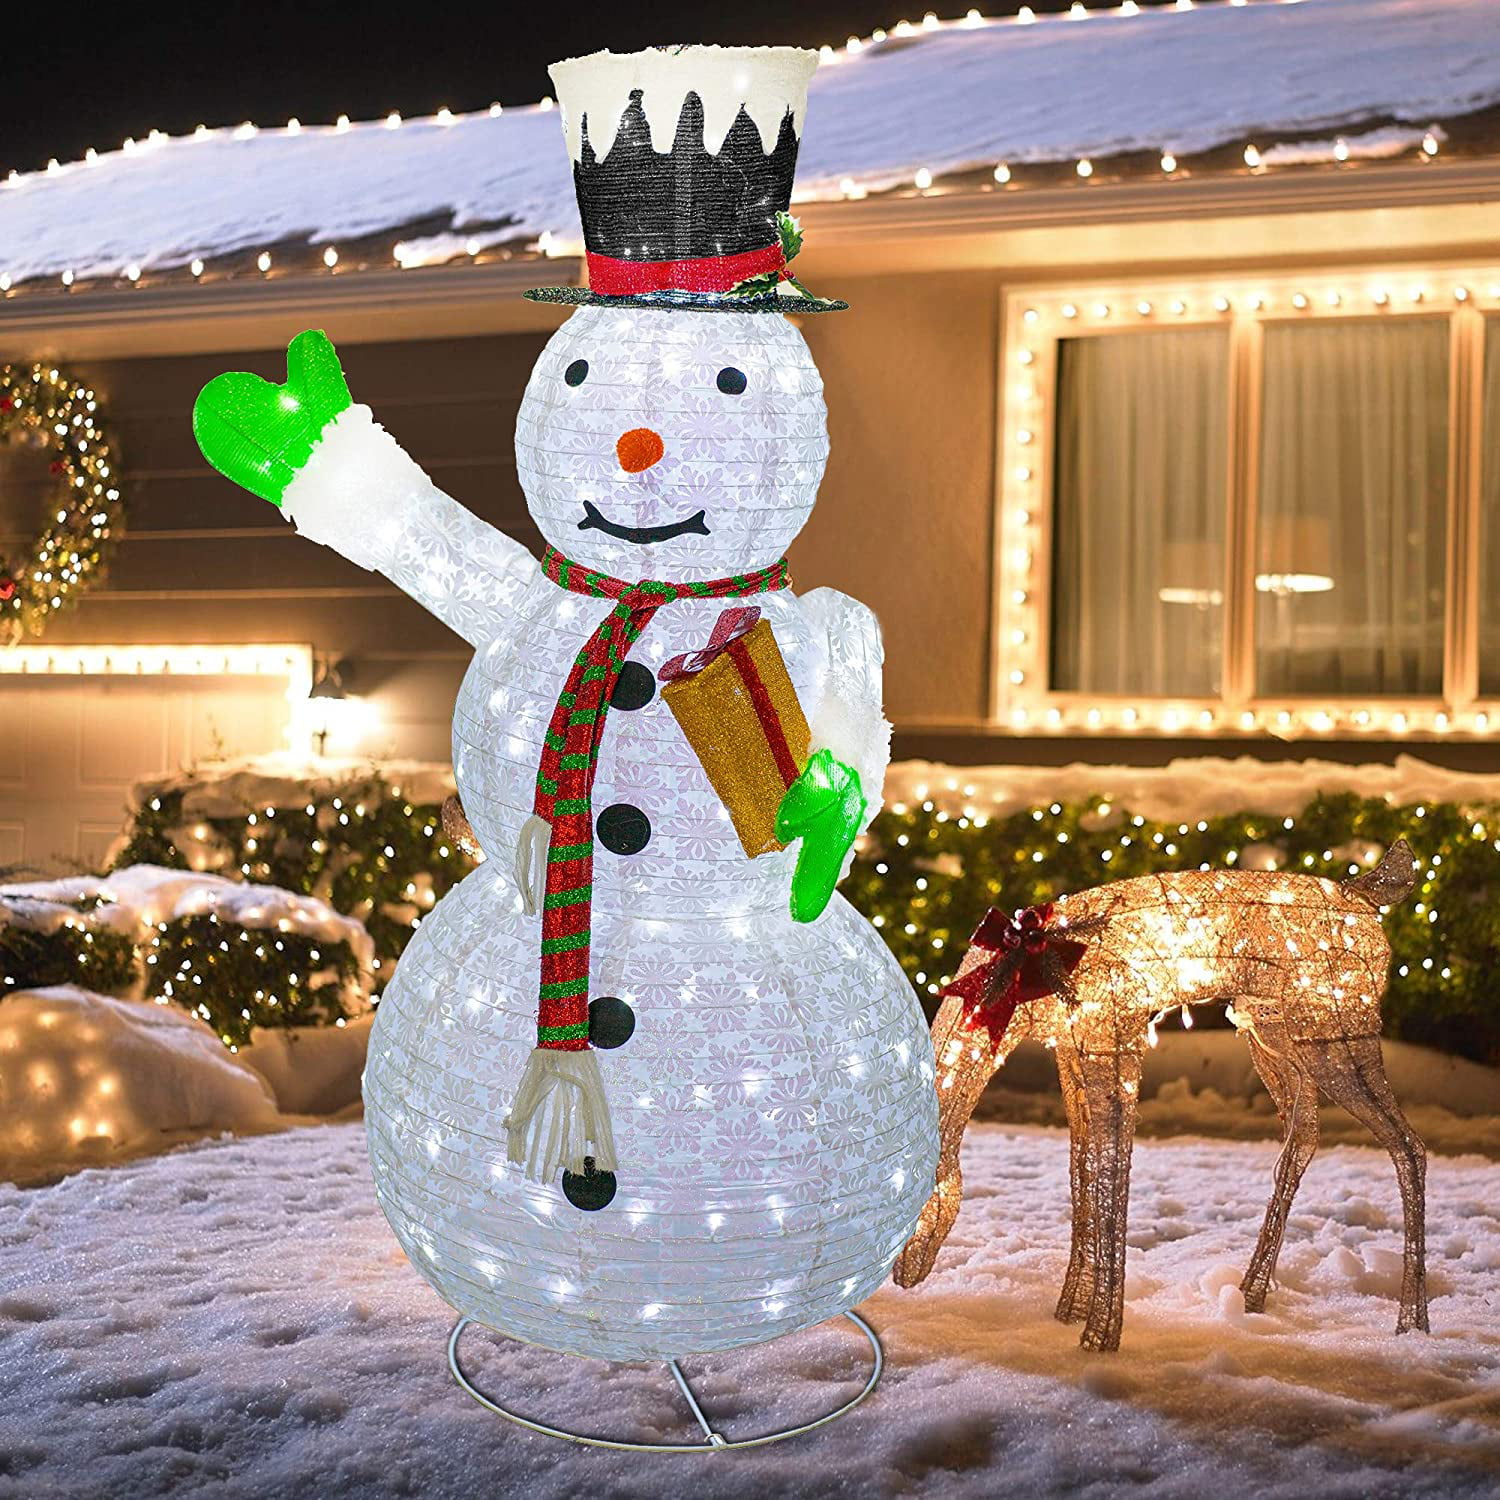 Best Christmas Snowman Decorations Info